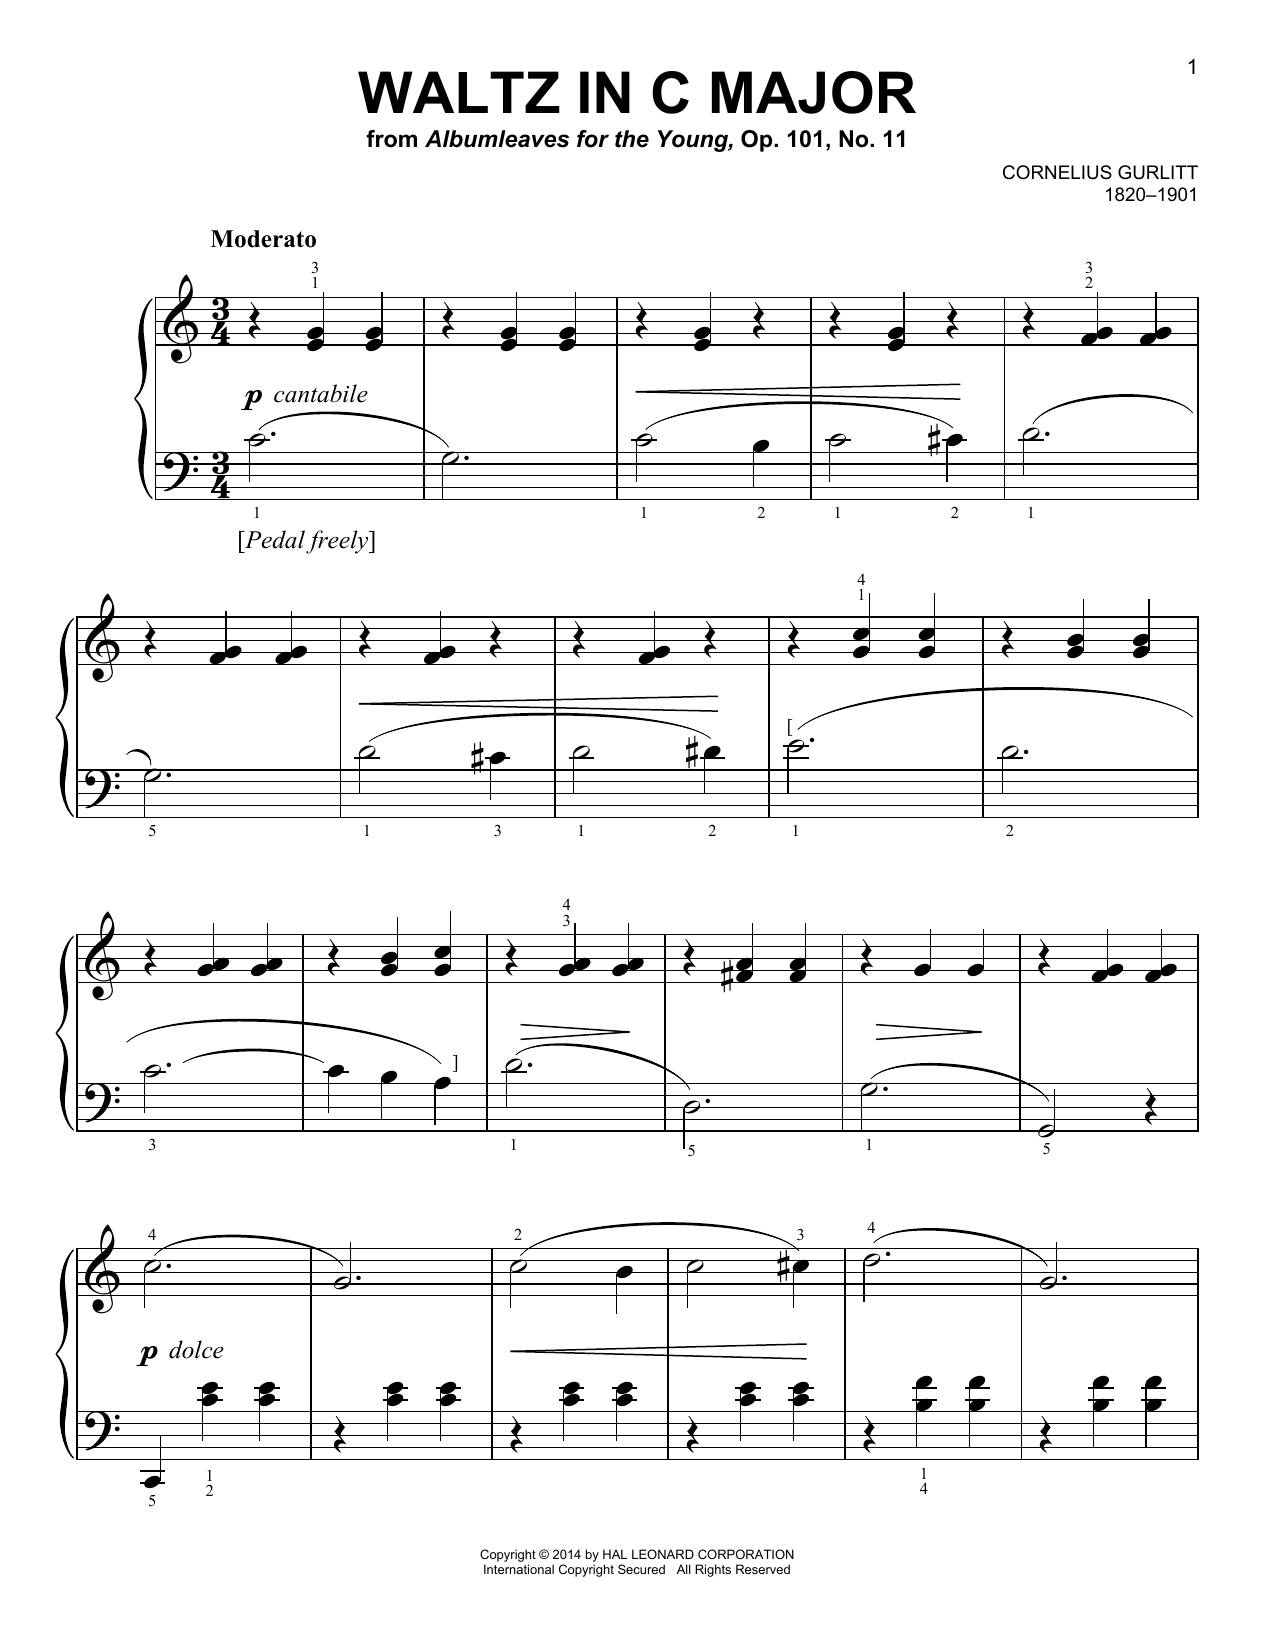 Cornelius Gurlitt Waltz, Op. 101, No. 11 Sheet Music Notes & Chords for Easy Piano - Download or Print PDF